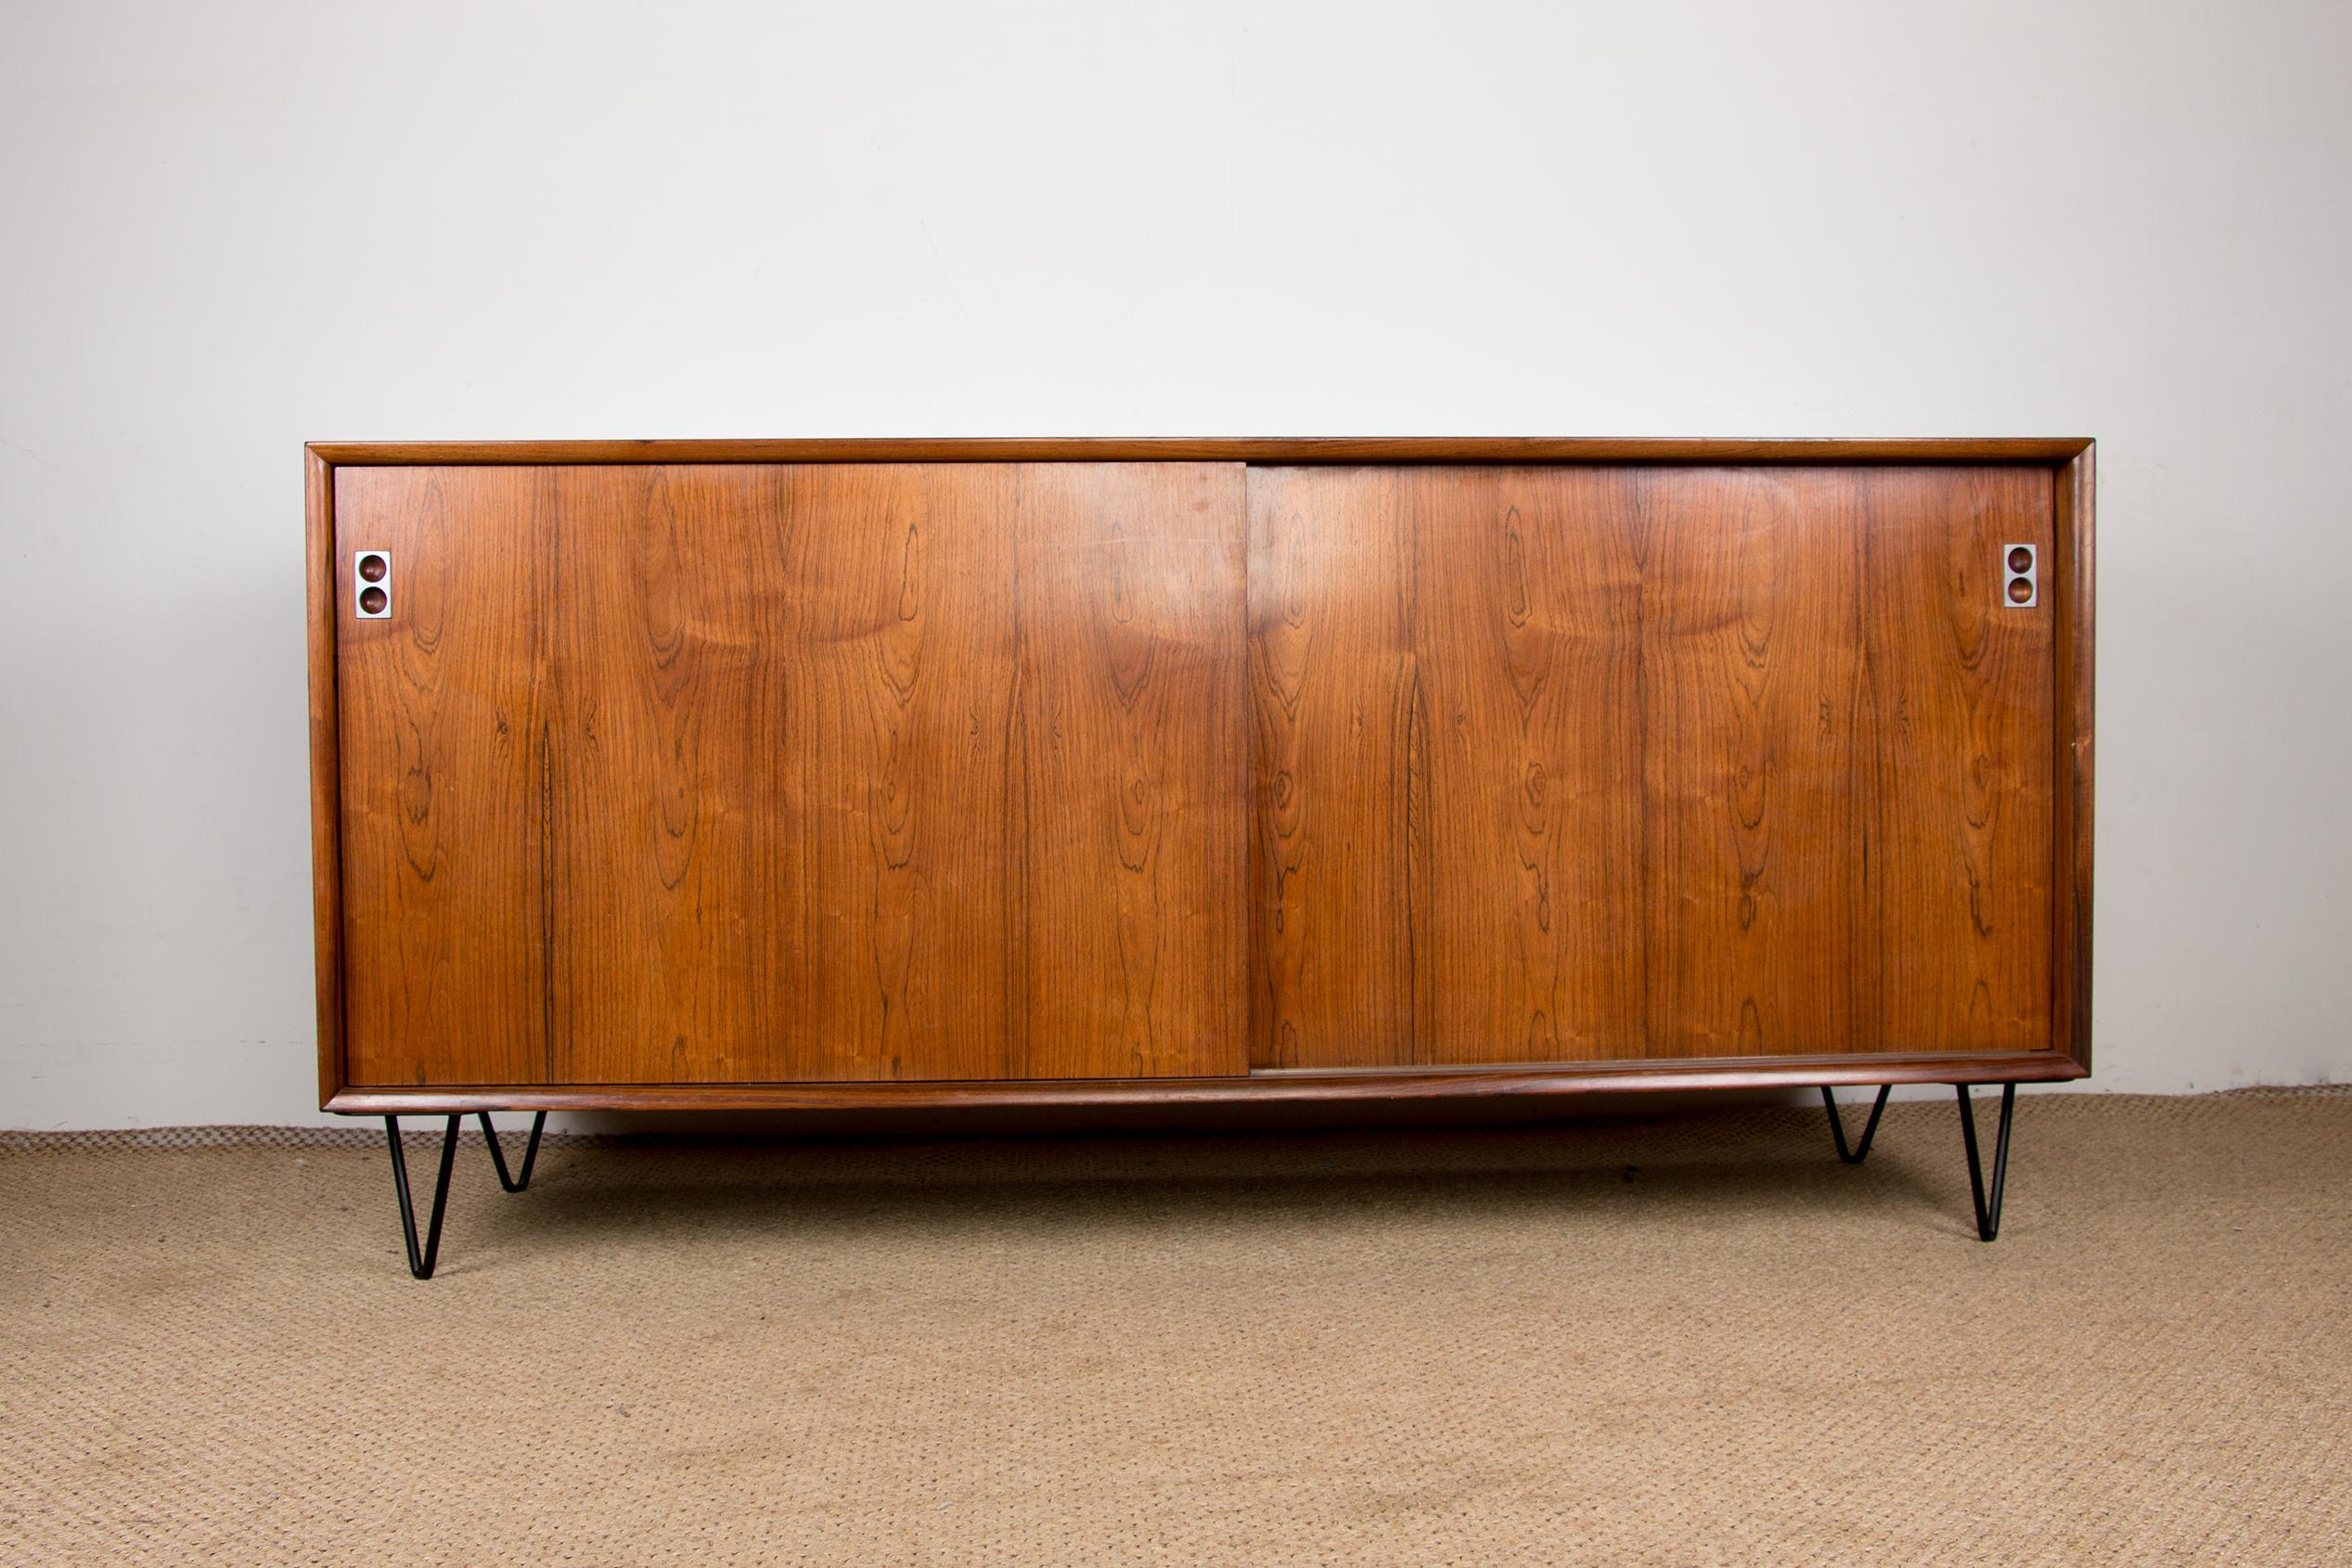 Scandinavian Modern Small Danish Rosewood Sideboard by Arne Vodder for Sibast Furnitures 1960.